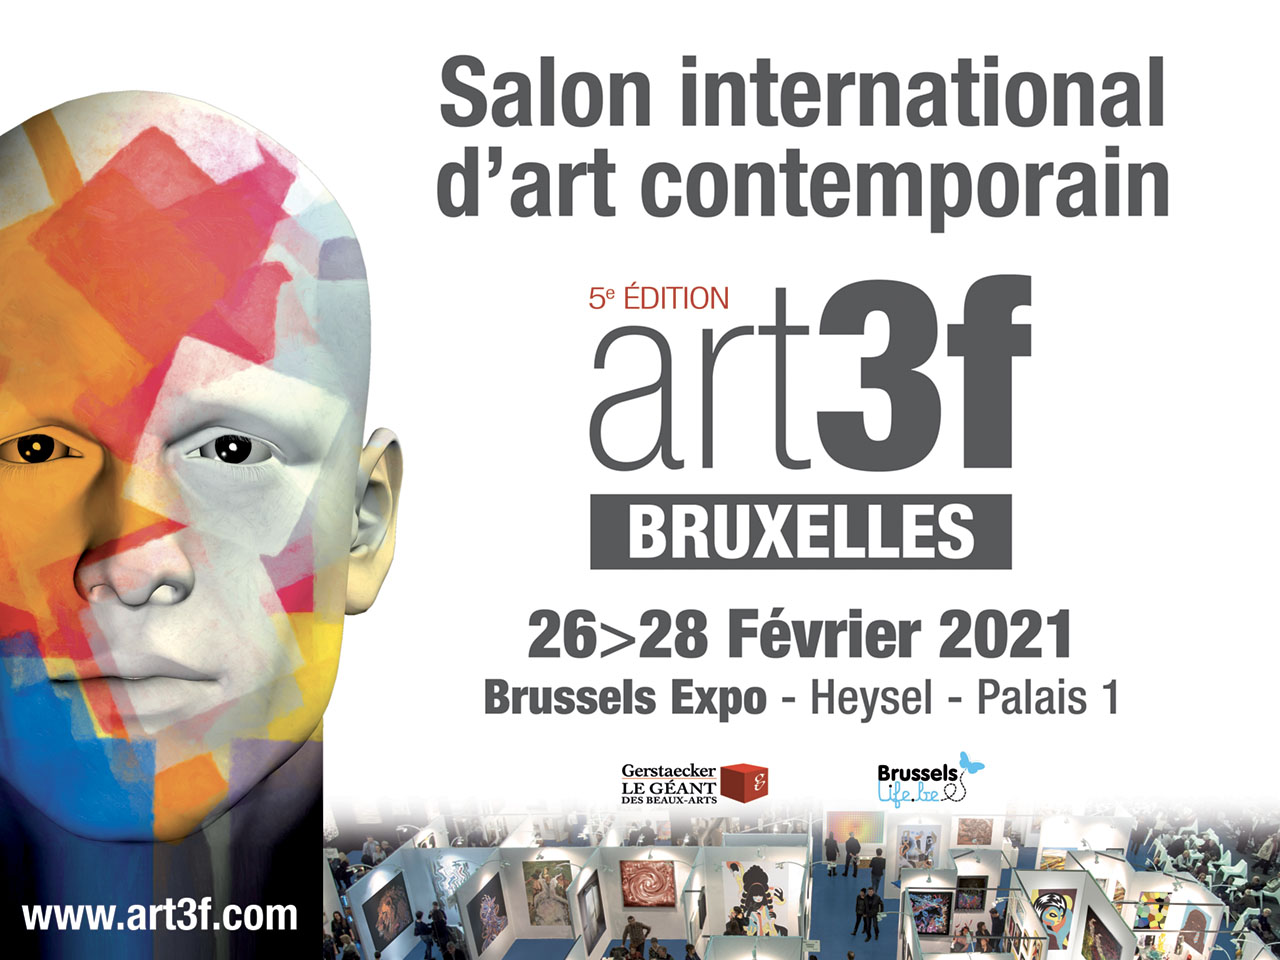 NEXT : Salon international d’art contemporain 26th-28th Feb.